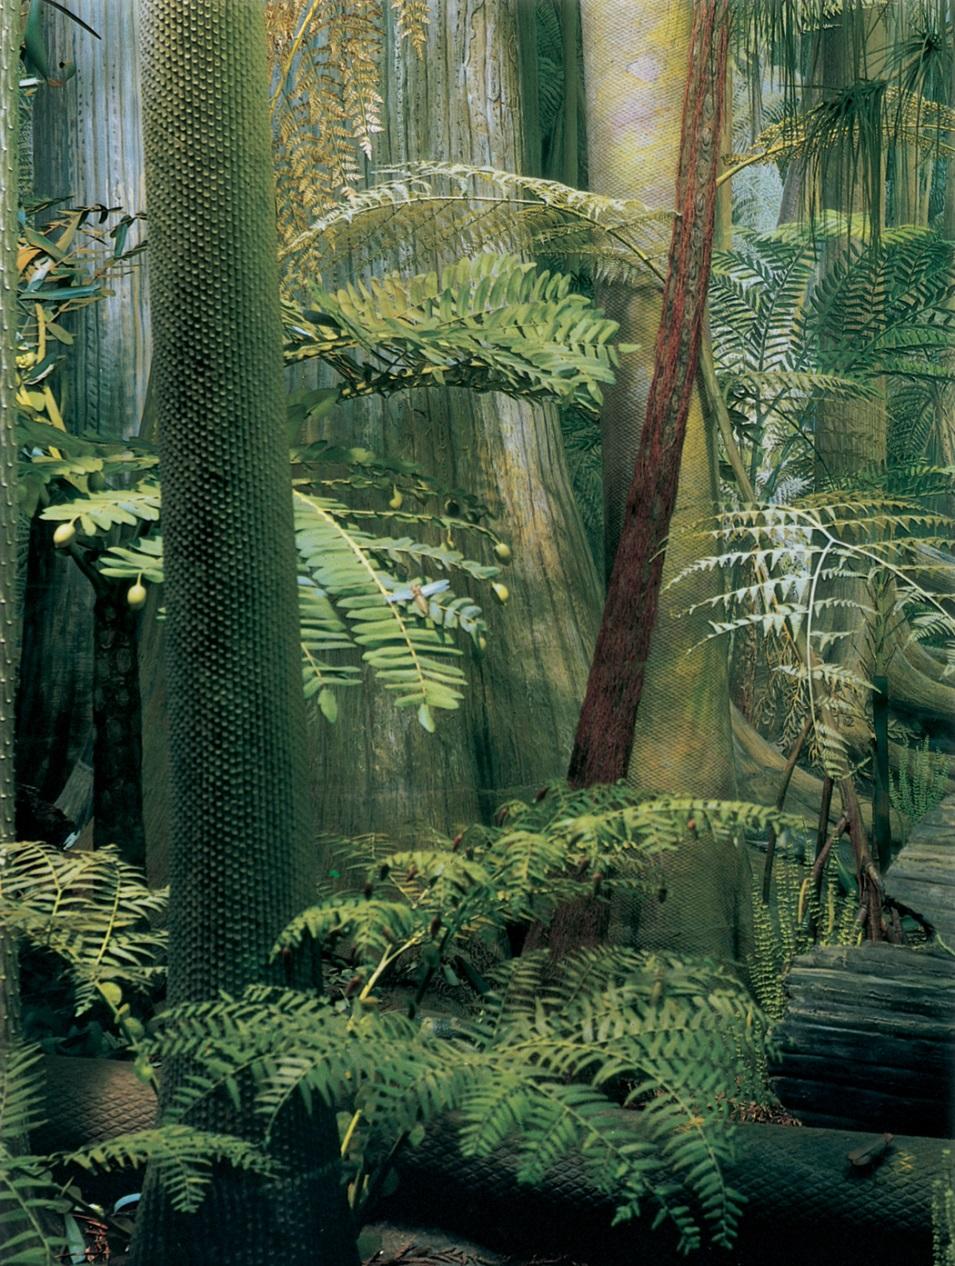 Late Paleozoic Carboniferous